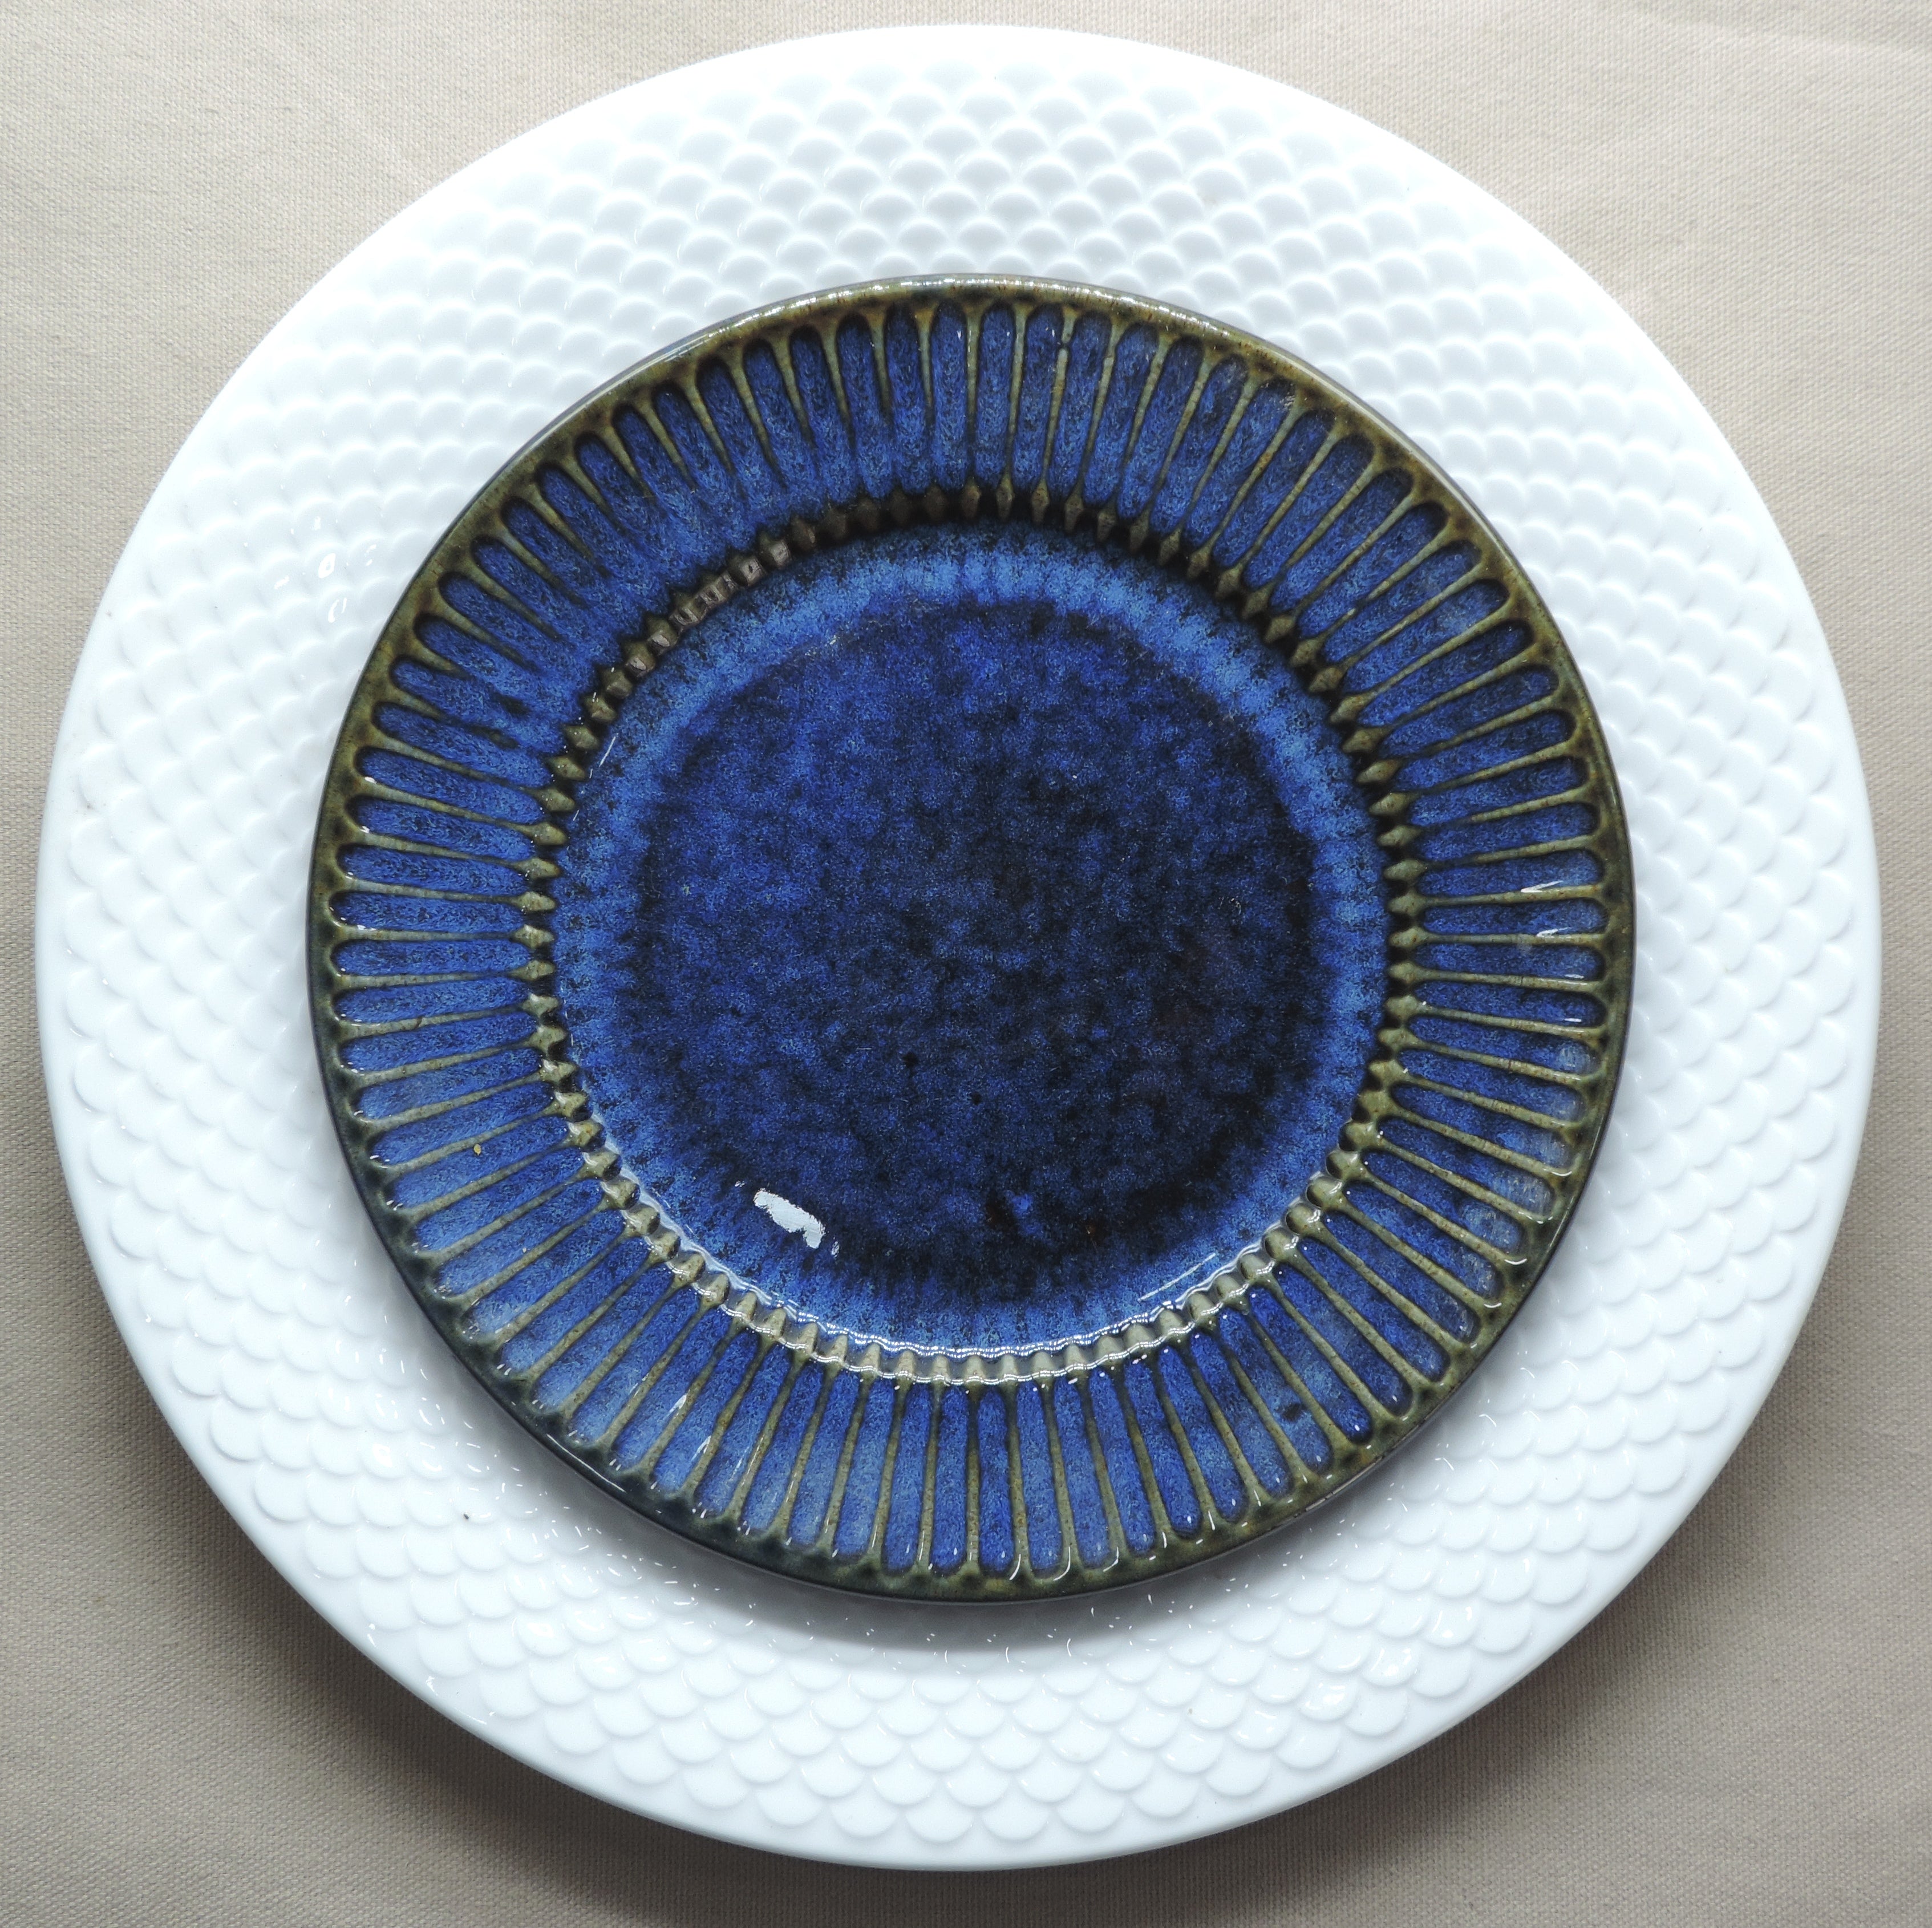 Dinnerware Collection Blue Quarter Plate Set of 4 - 19 CM Round